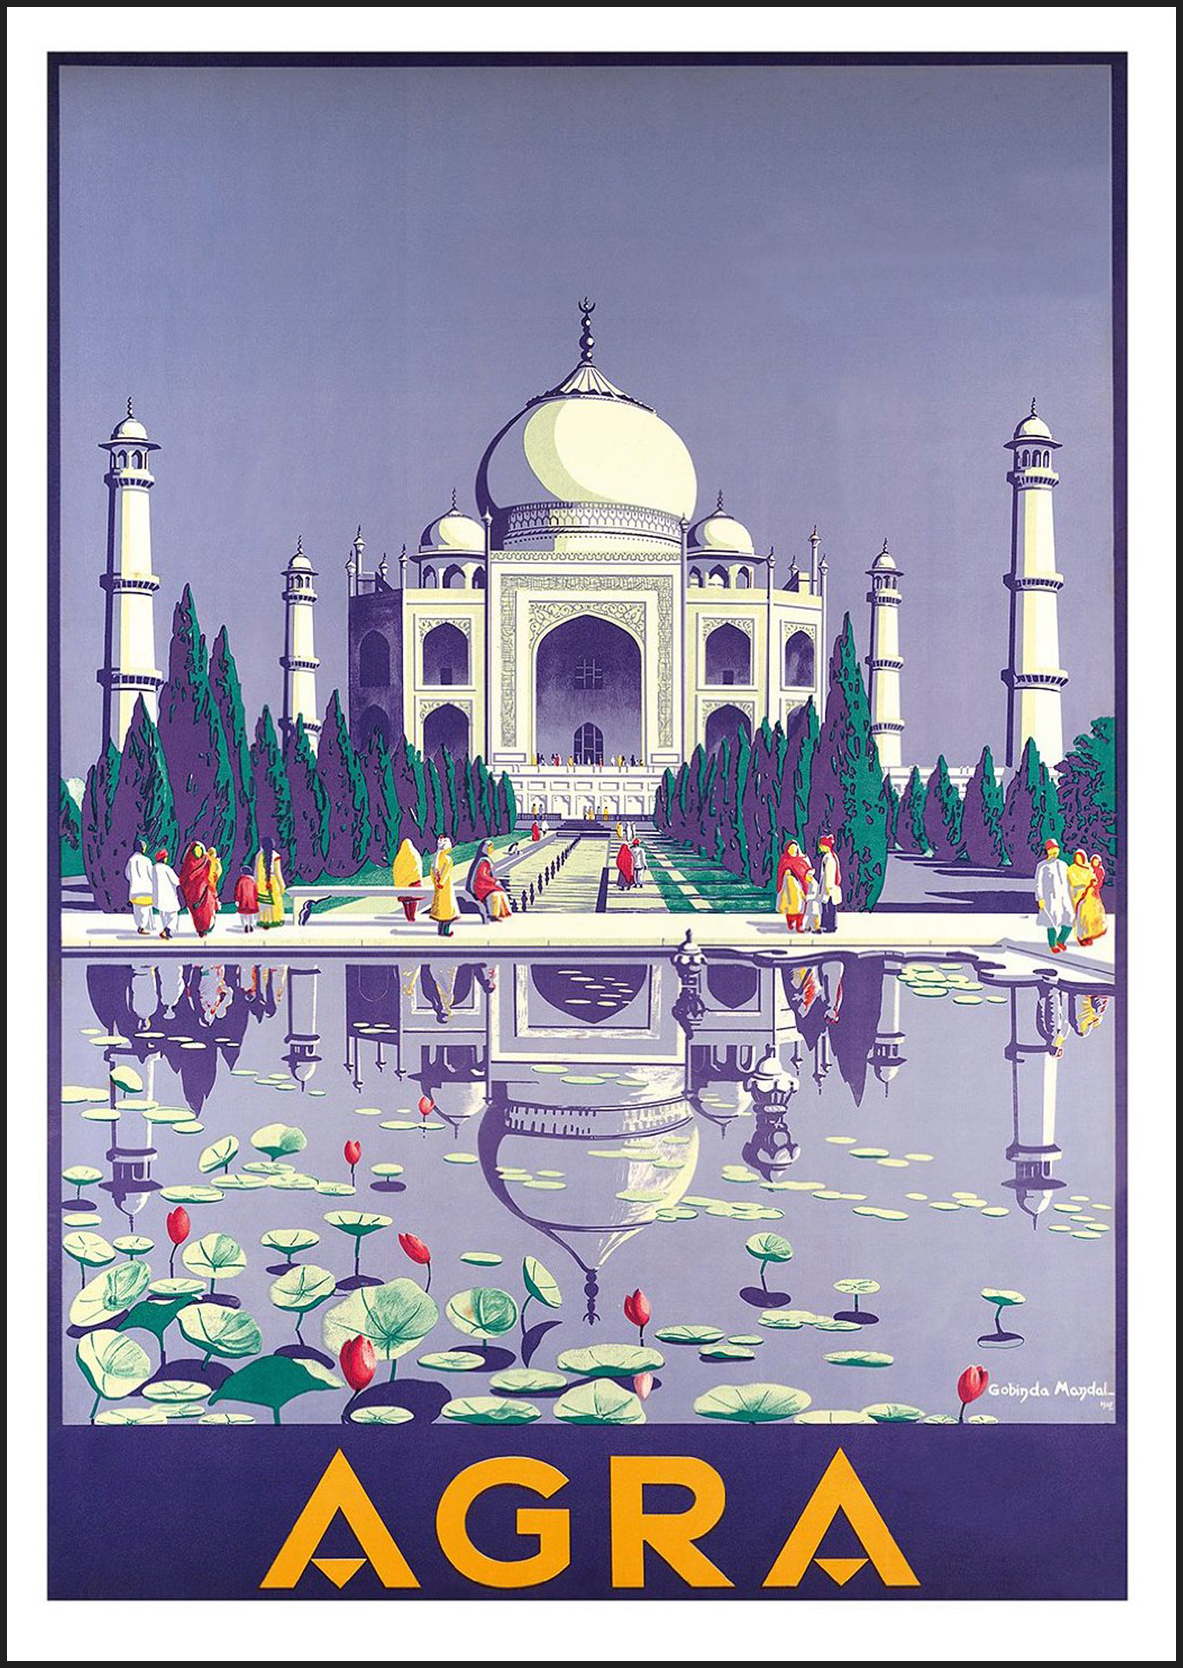 TAJ MAHAL POSTER: Vintage Agra Tourism-advertentie